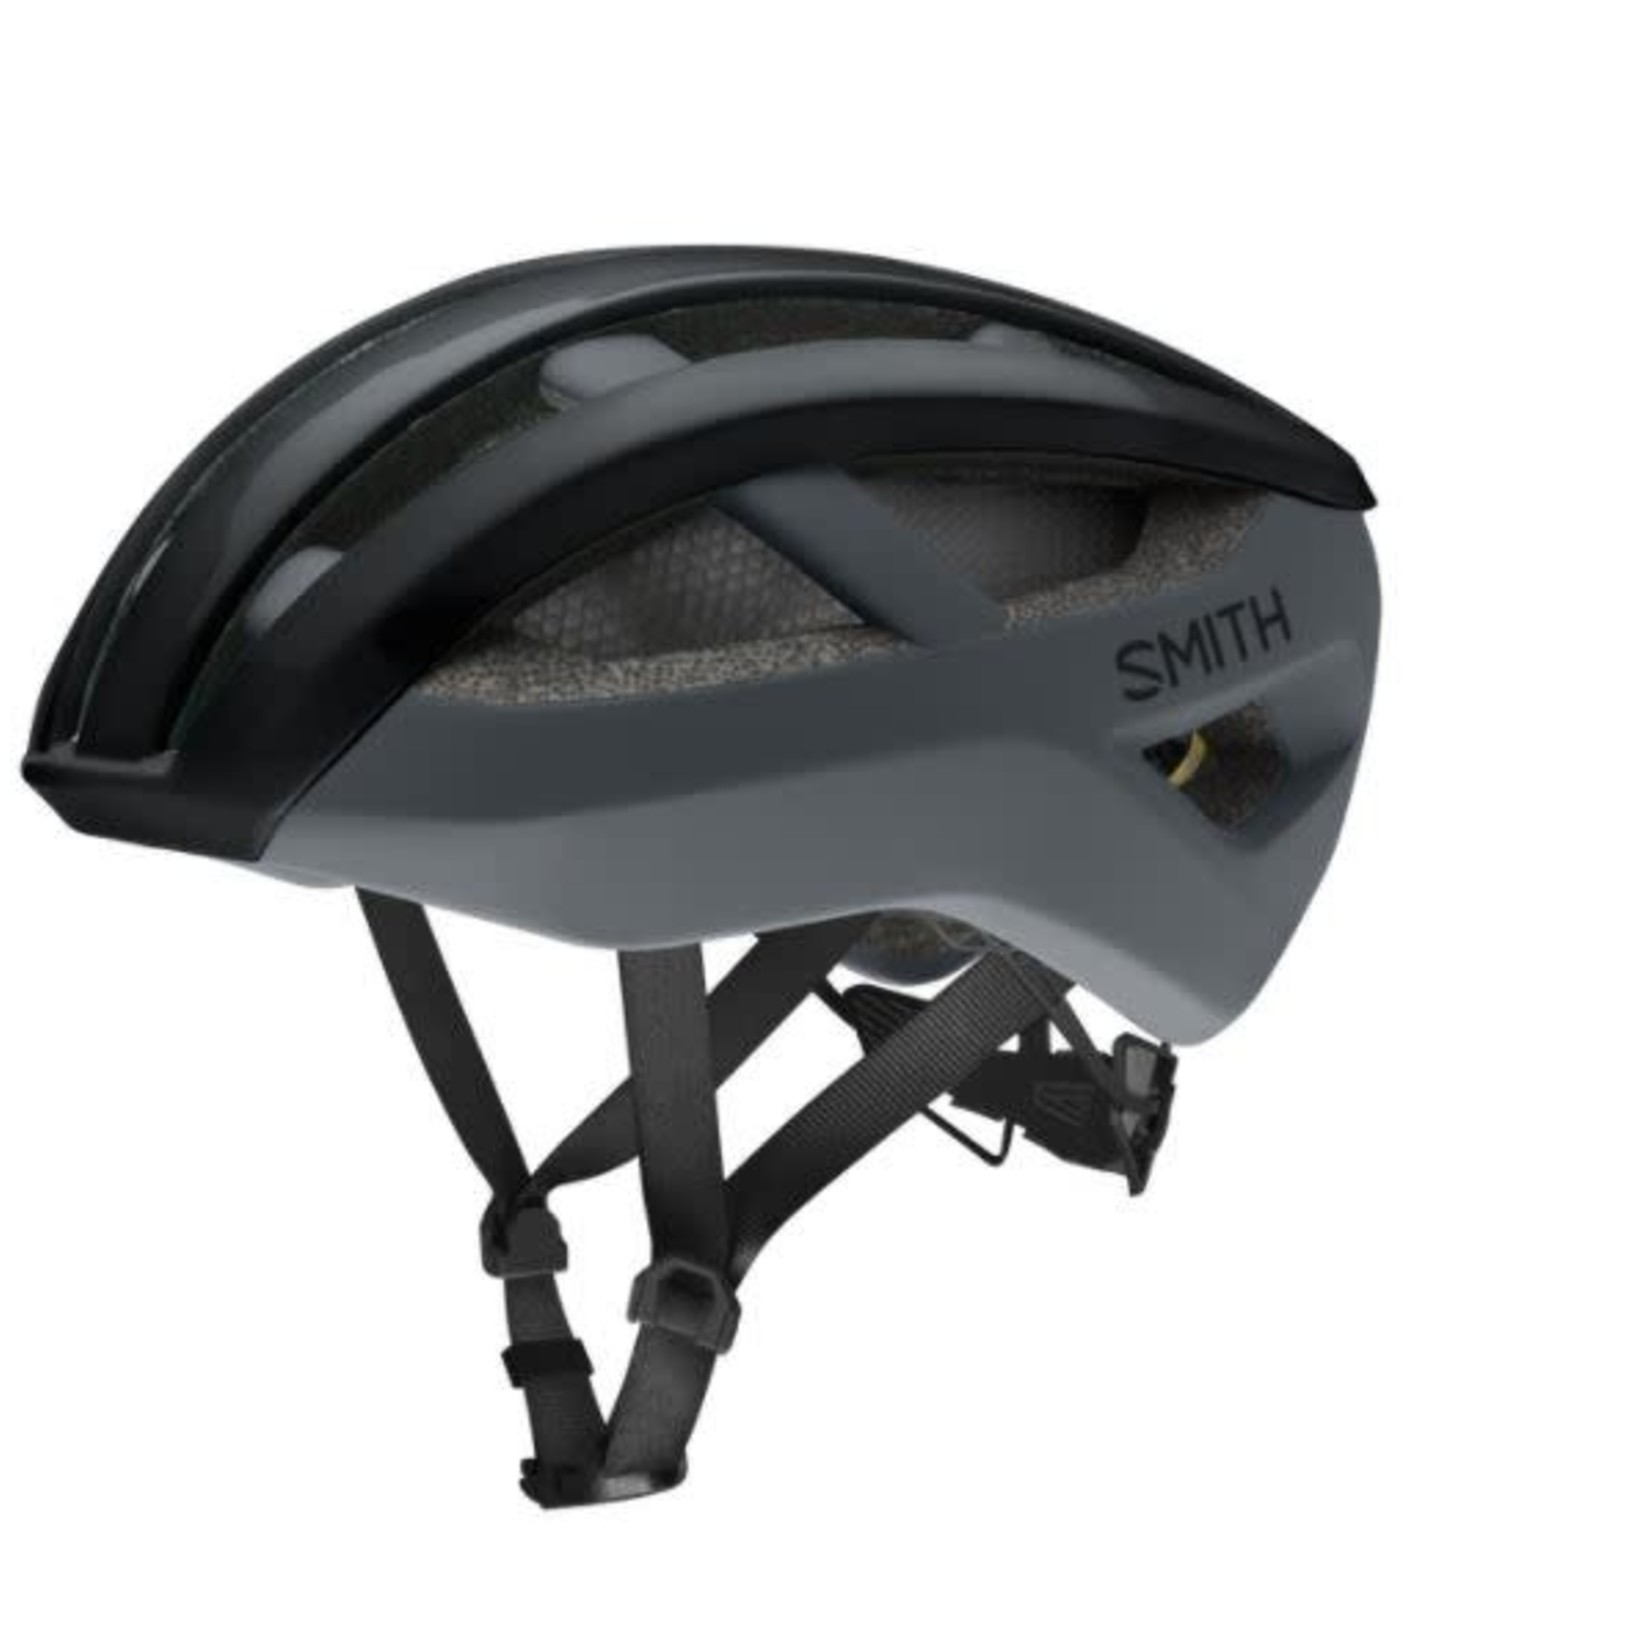 Smith Optics SMITH Optics Network MIPS Helmet with Aerocore featuring Koroyd (Black) SIZE LARGE